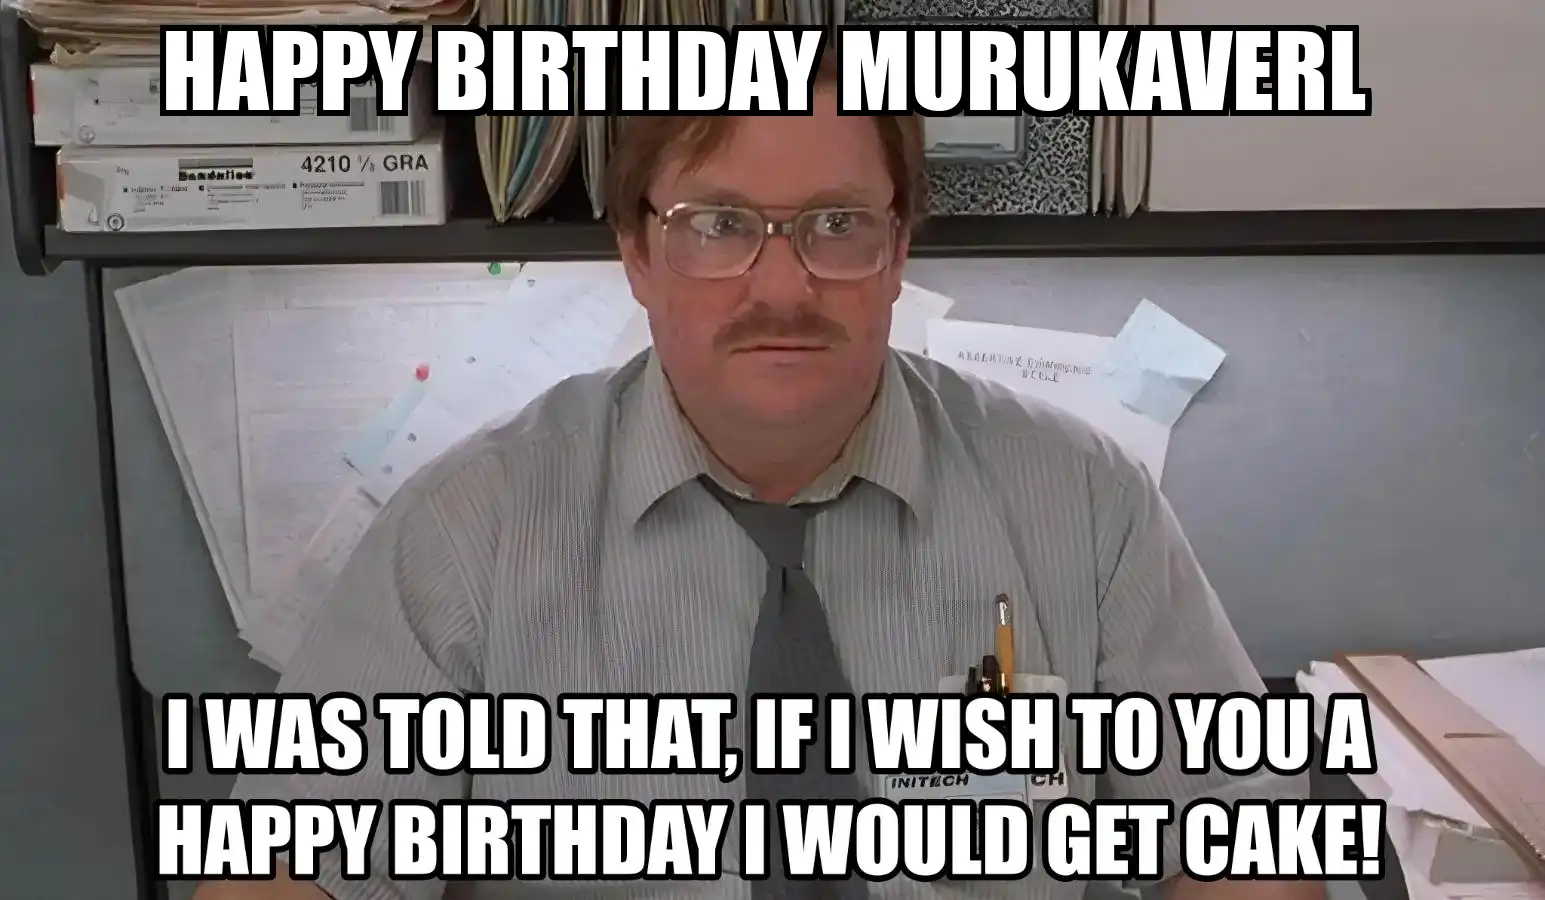 Happy Birthday Murukaverl I Would Get A Cake Meme